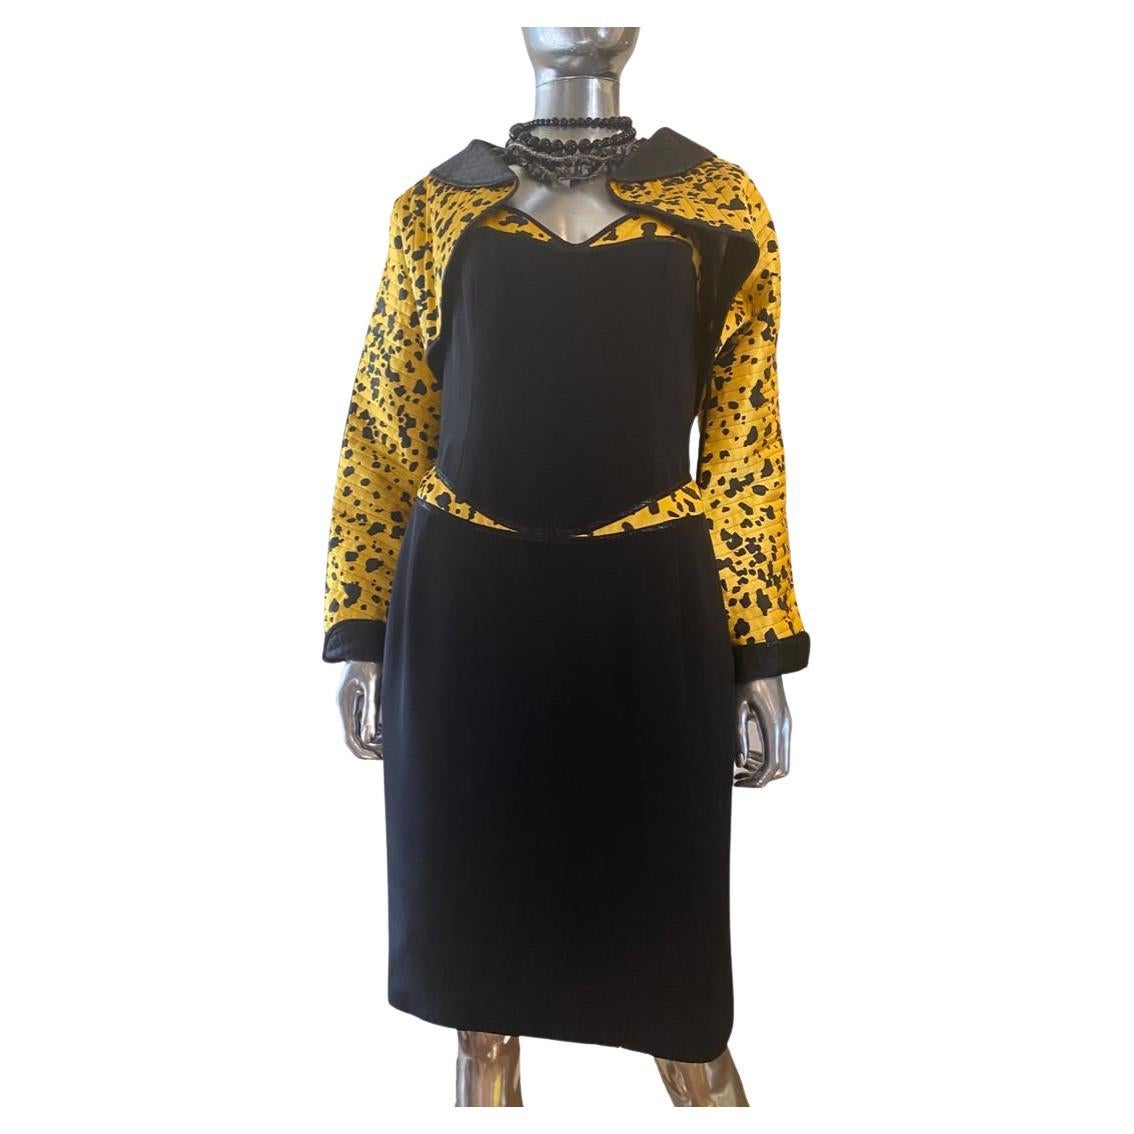 Geoffrey Beene 2 Piece Silk Ensemble Coat and Dress for Elizabeth Arden Size 6 For Sale